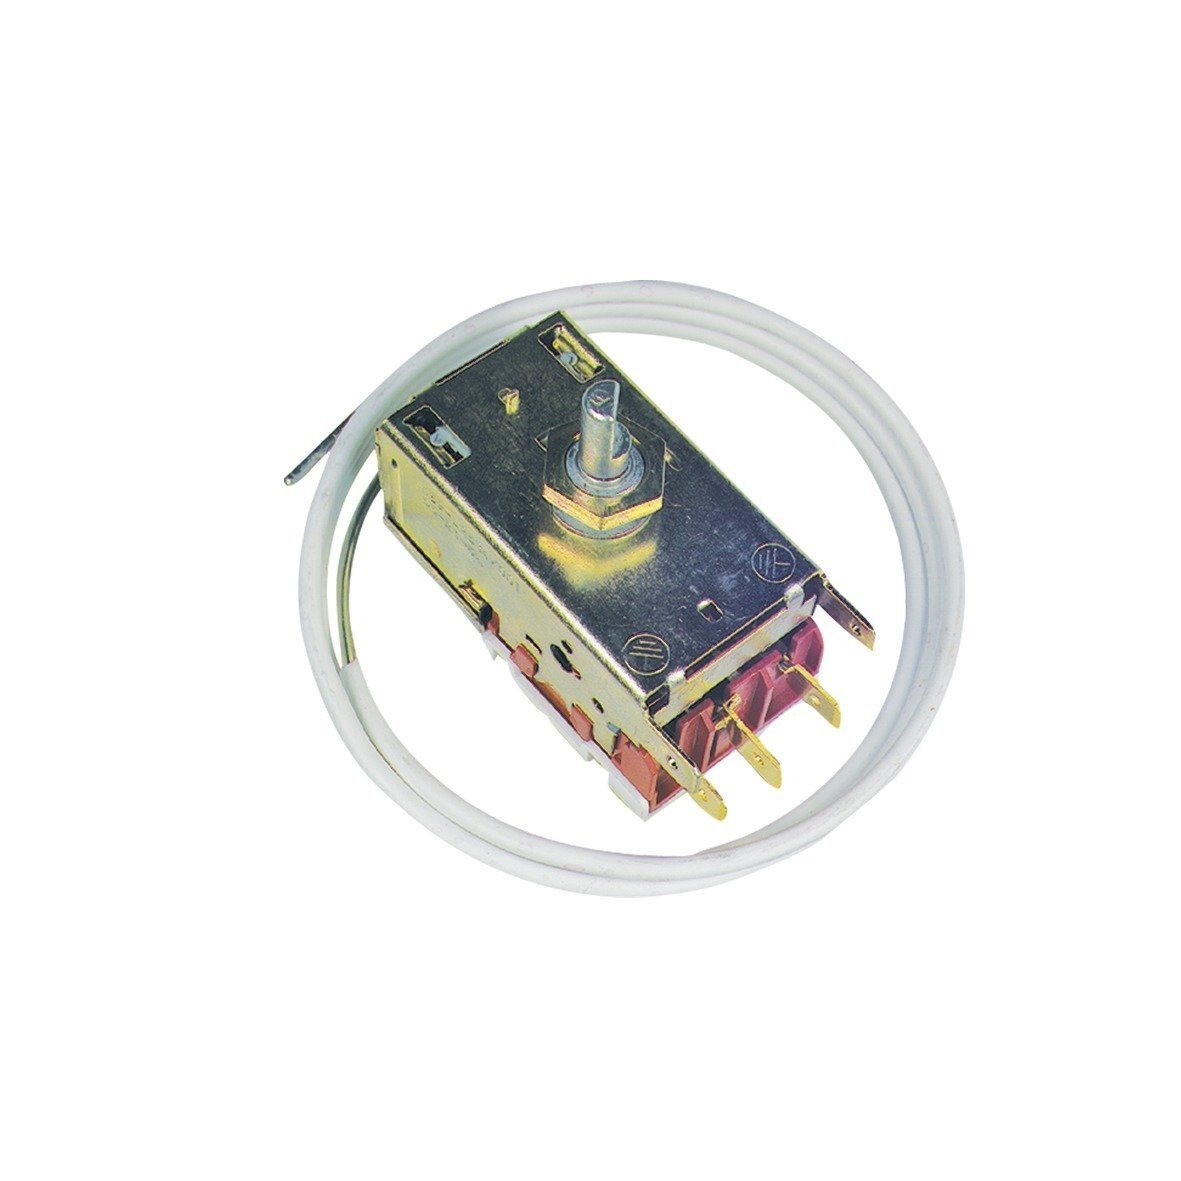 easyPART K59-L2534, Ranco / Thermostat Kühlschrank RANCO K59L2534001 Gefrierschrank Thermodetektor wie